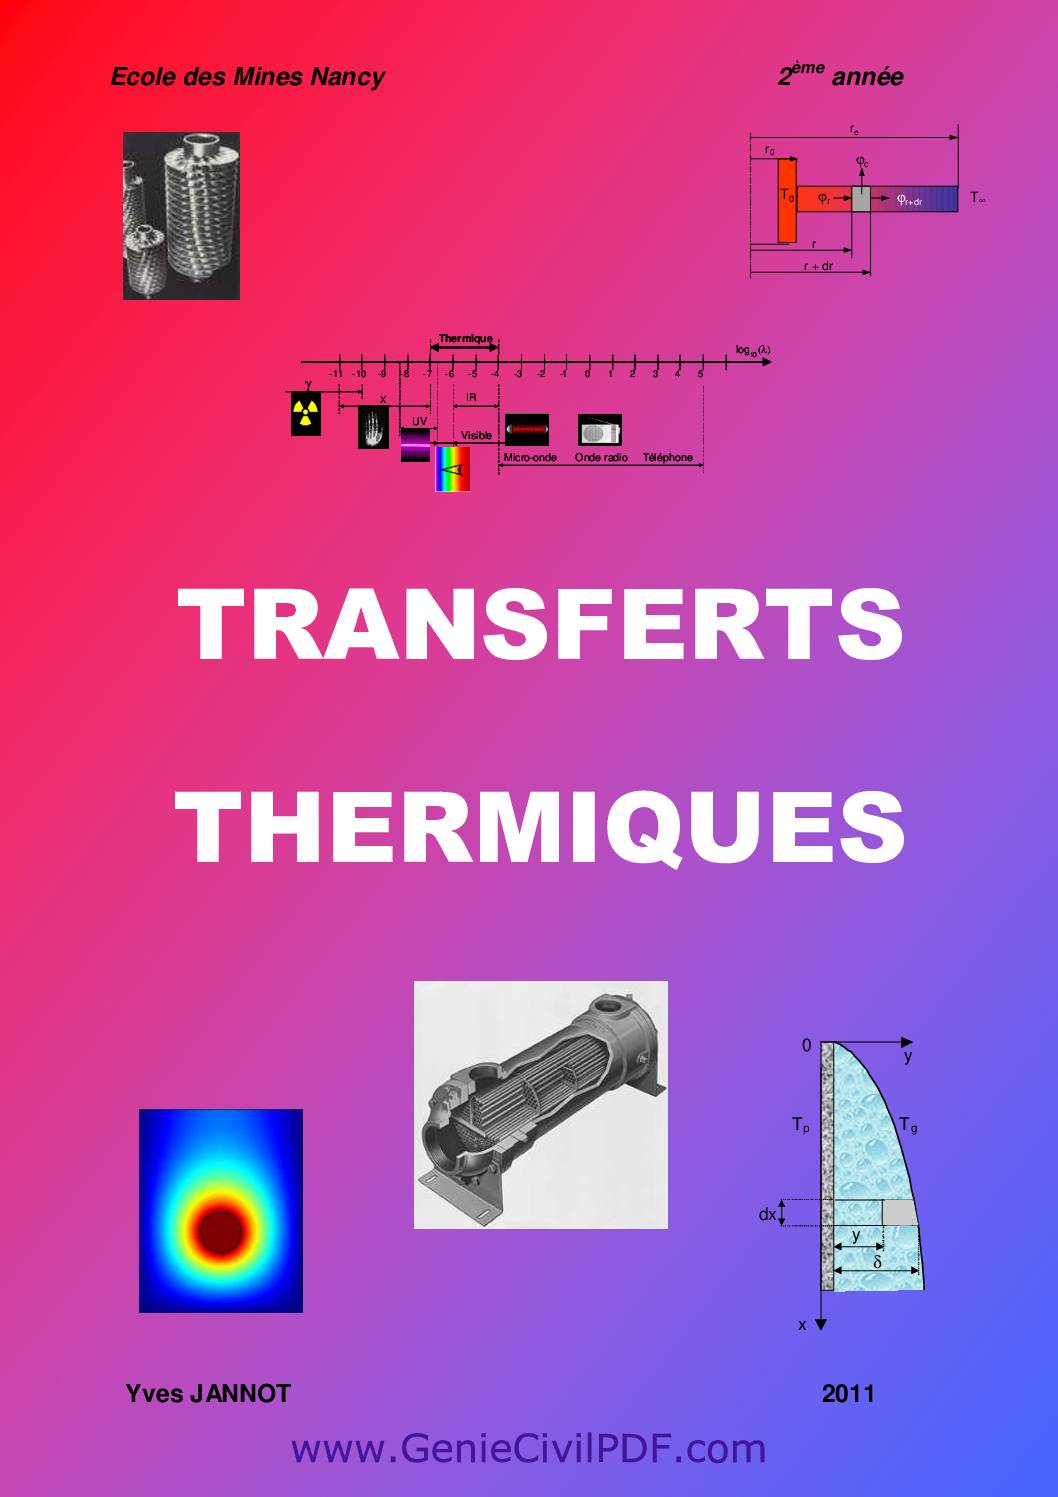 Transferts thermique